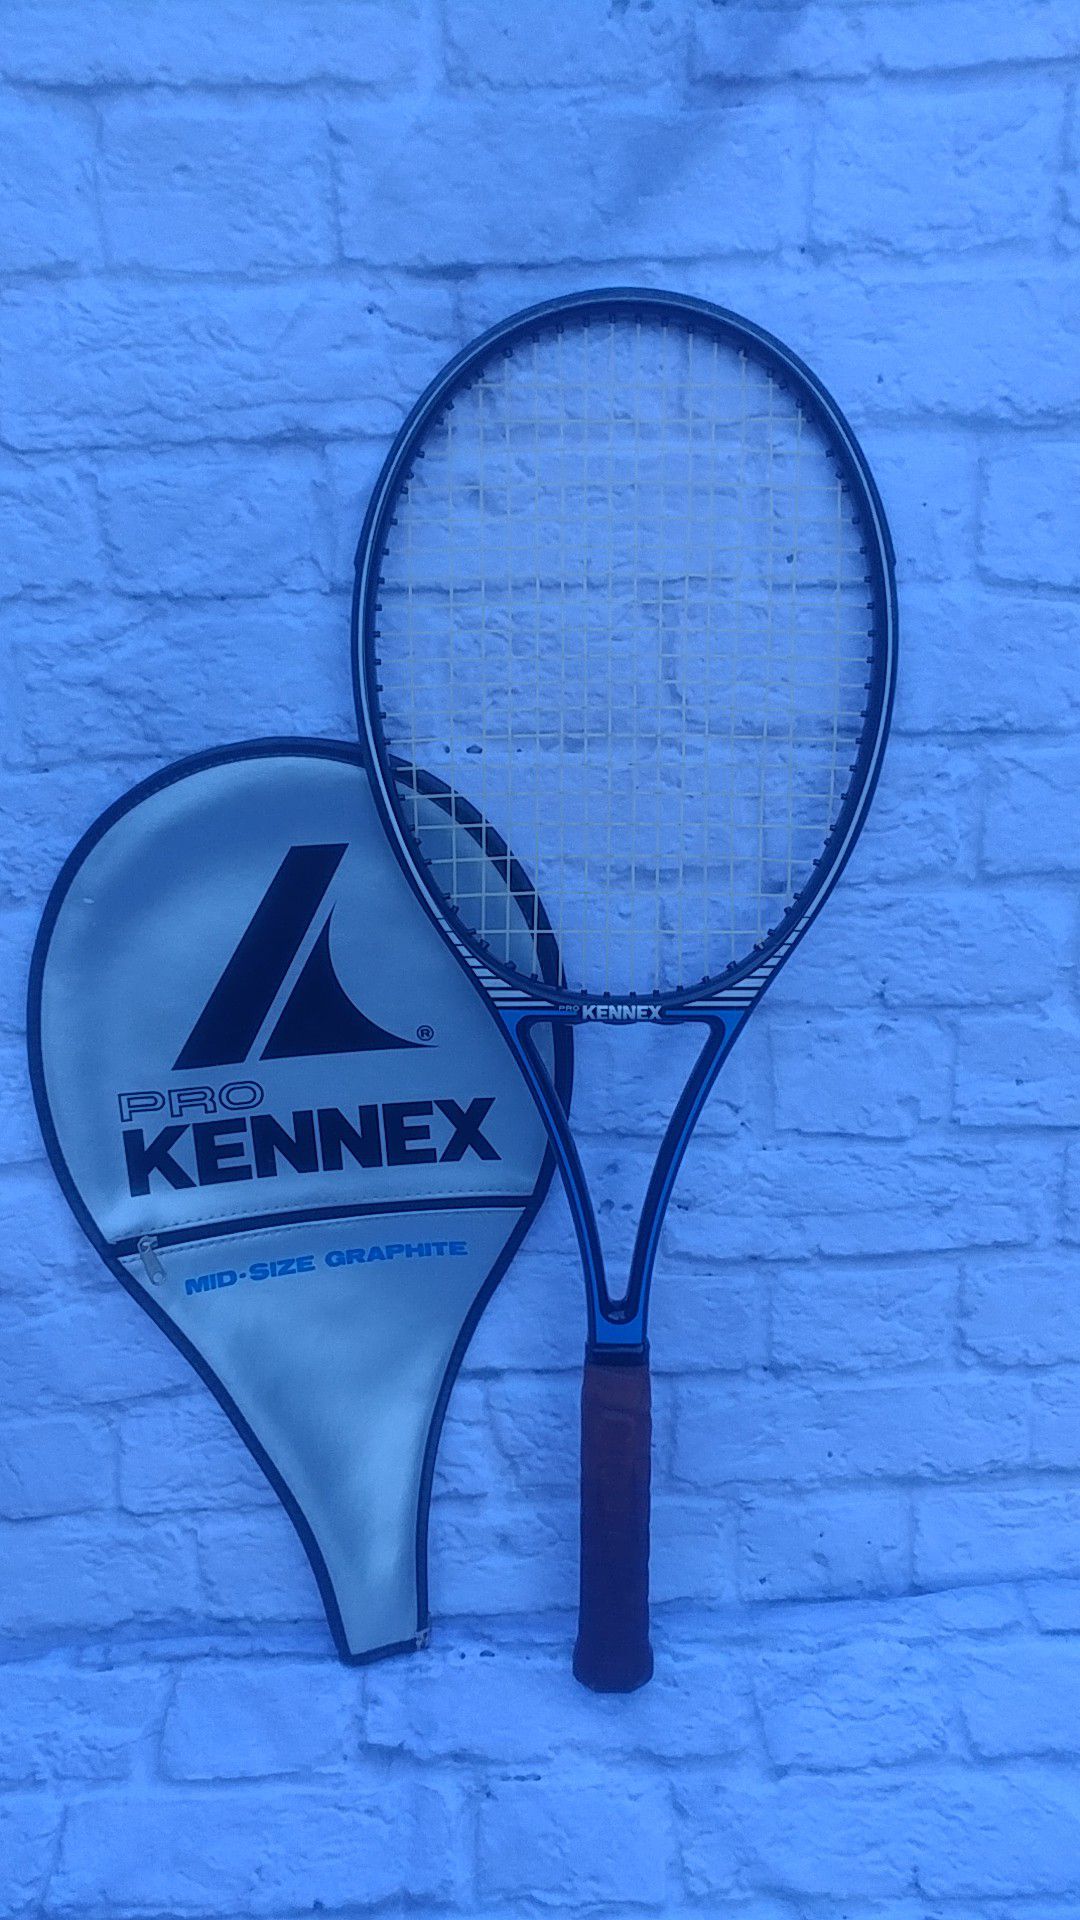 Pro Kennex Ace Tennis Racket